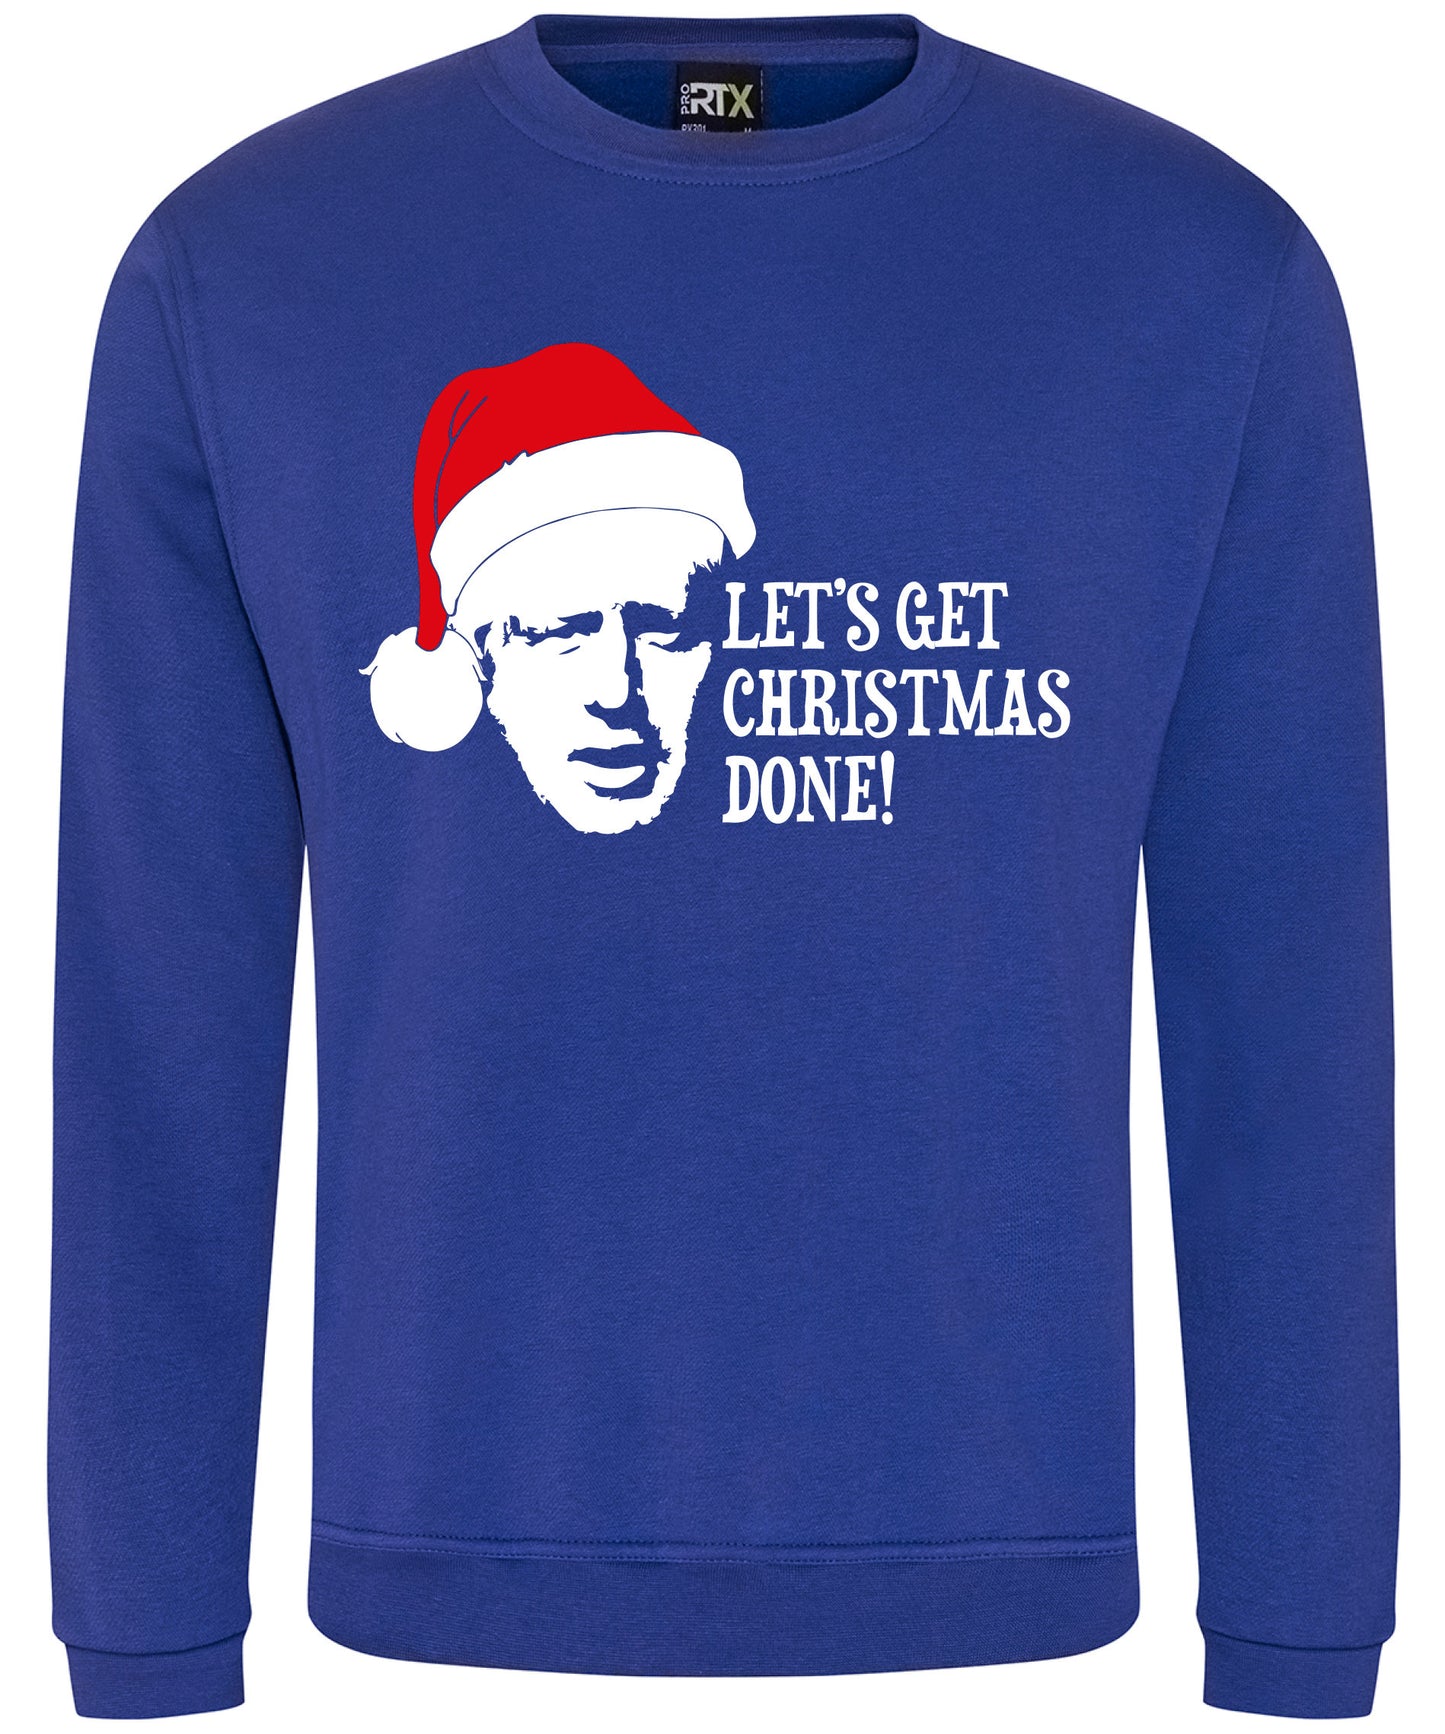 Let's Get Christmas Done Boris Johnson RX301 Sweatshirt Funny Christmas Jumper